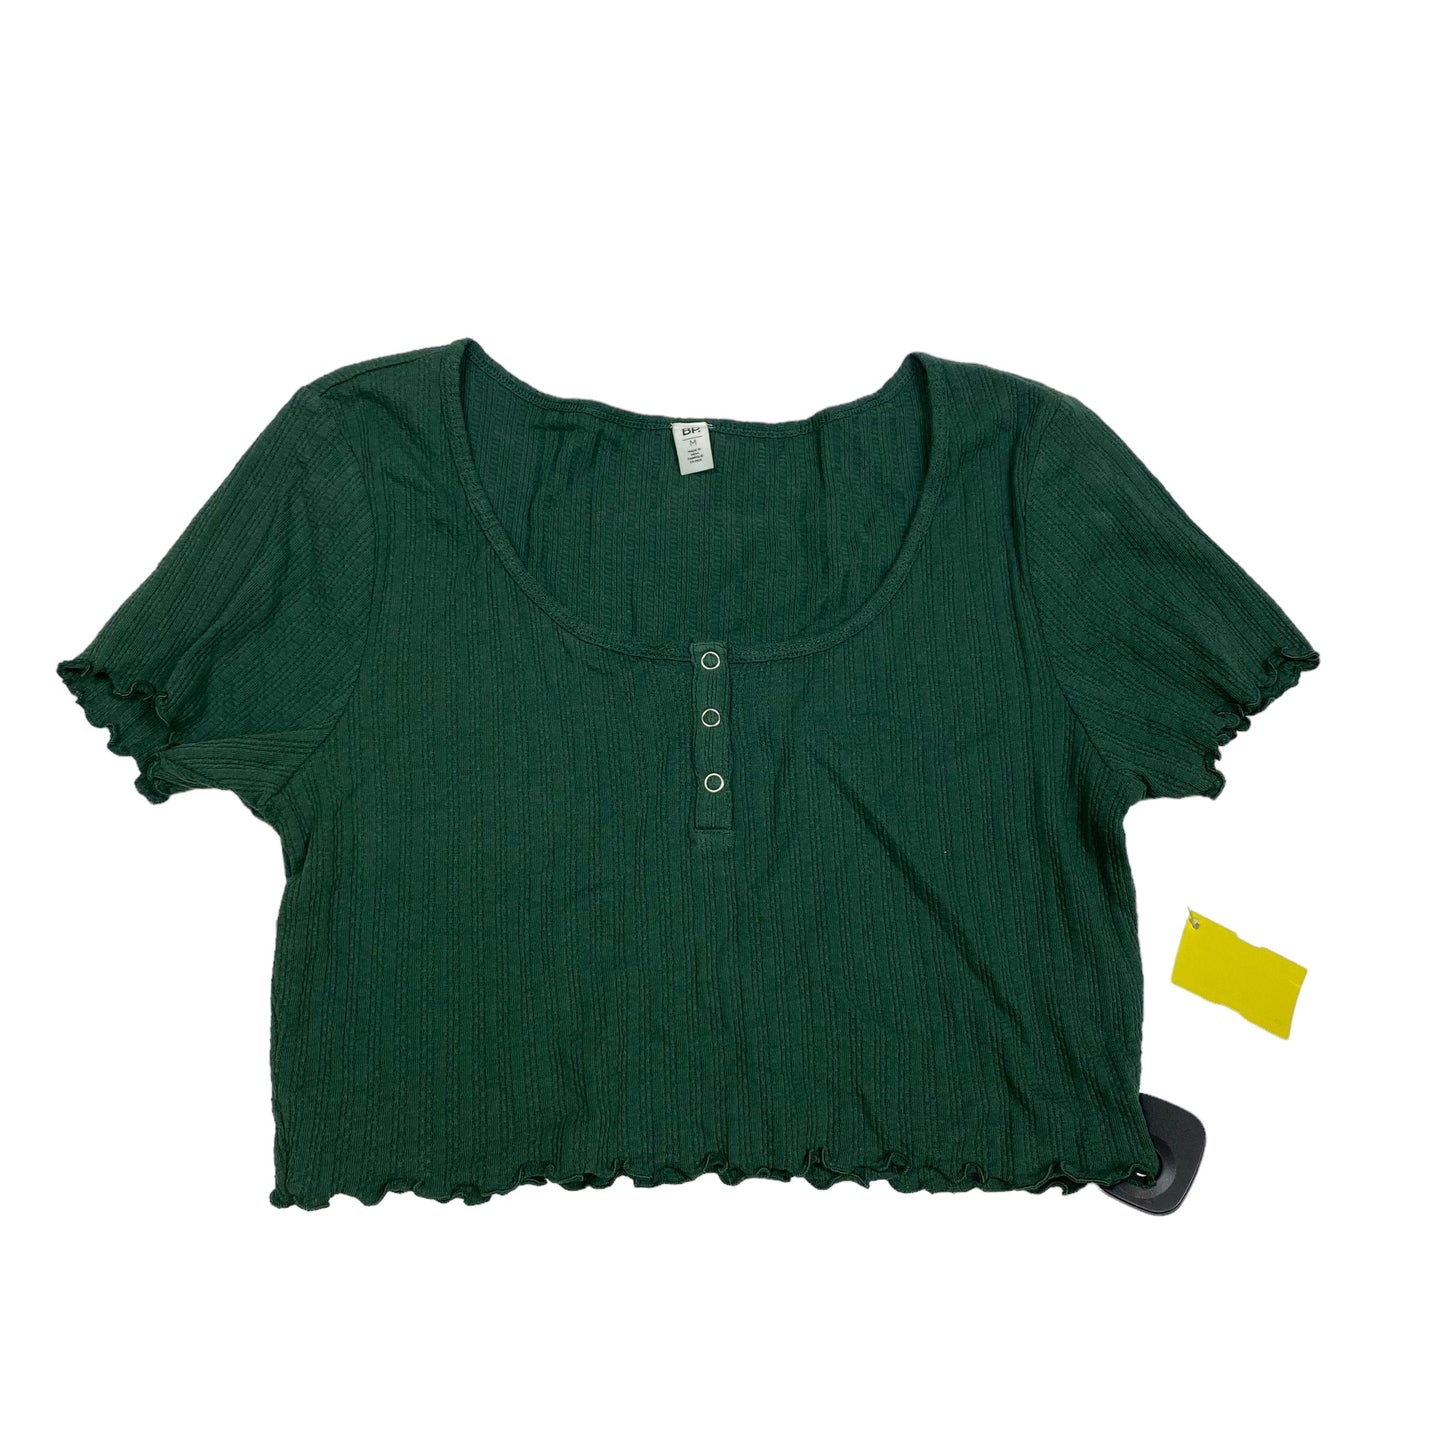 Green Top Short Sleeve Bp, Size M